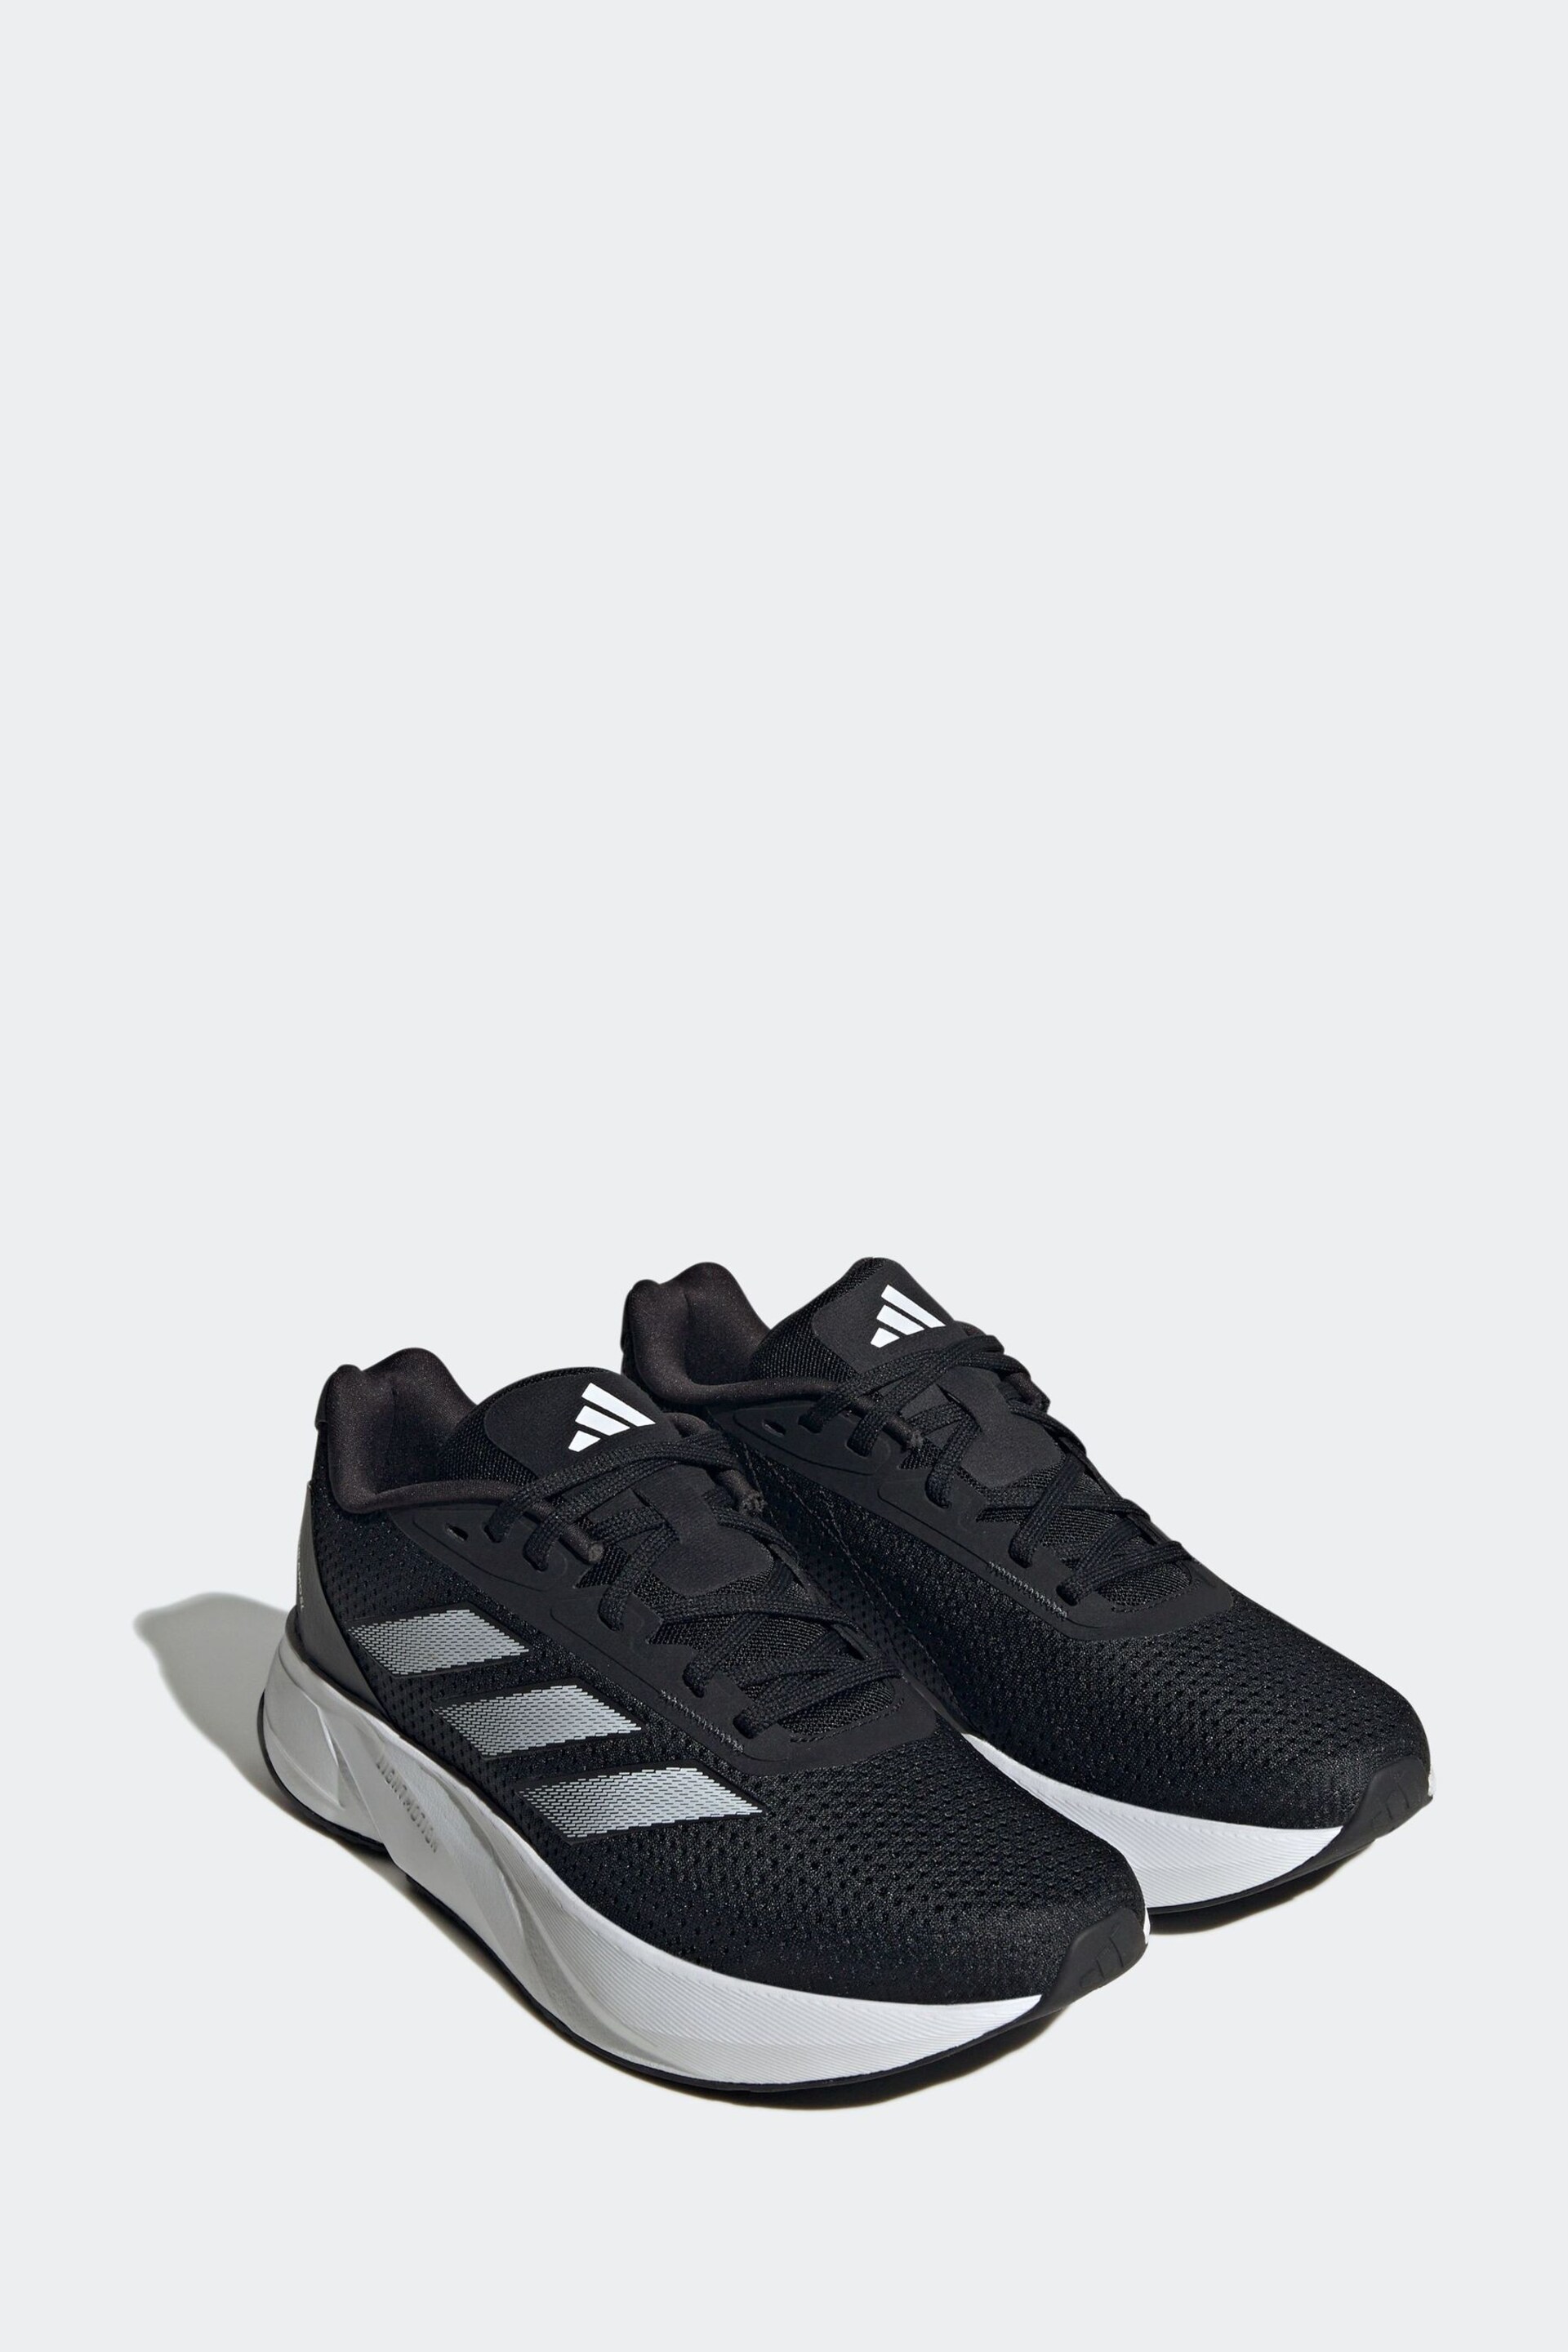 adidas Black/White Duramo Running Shoes - Image 4 of 10